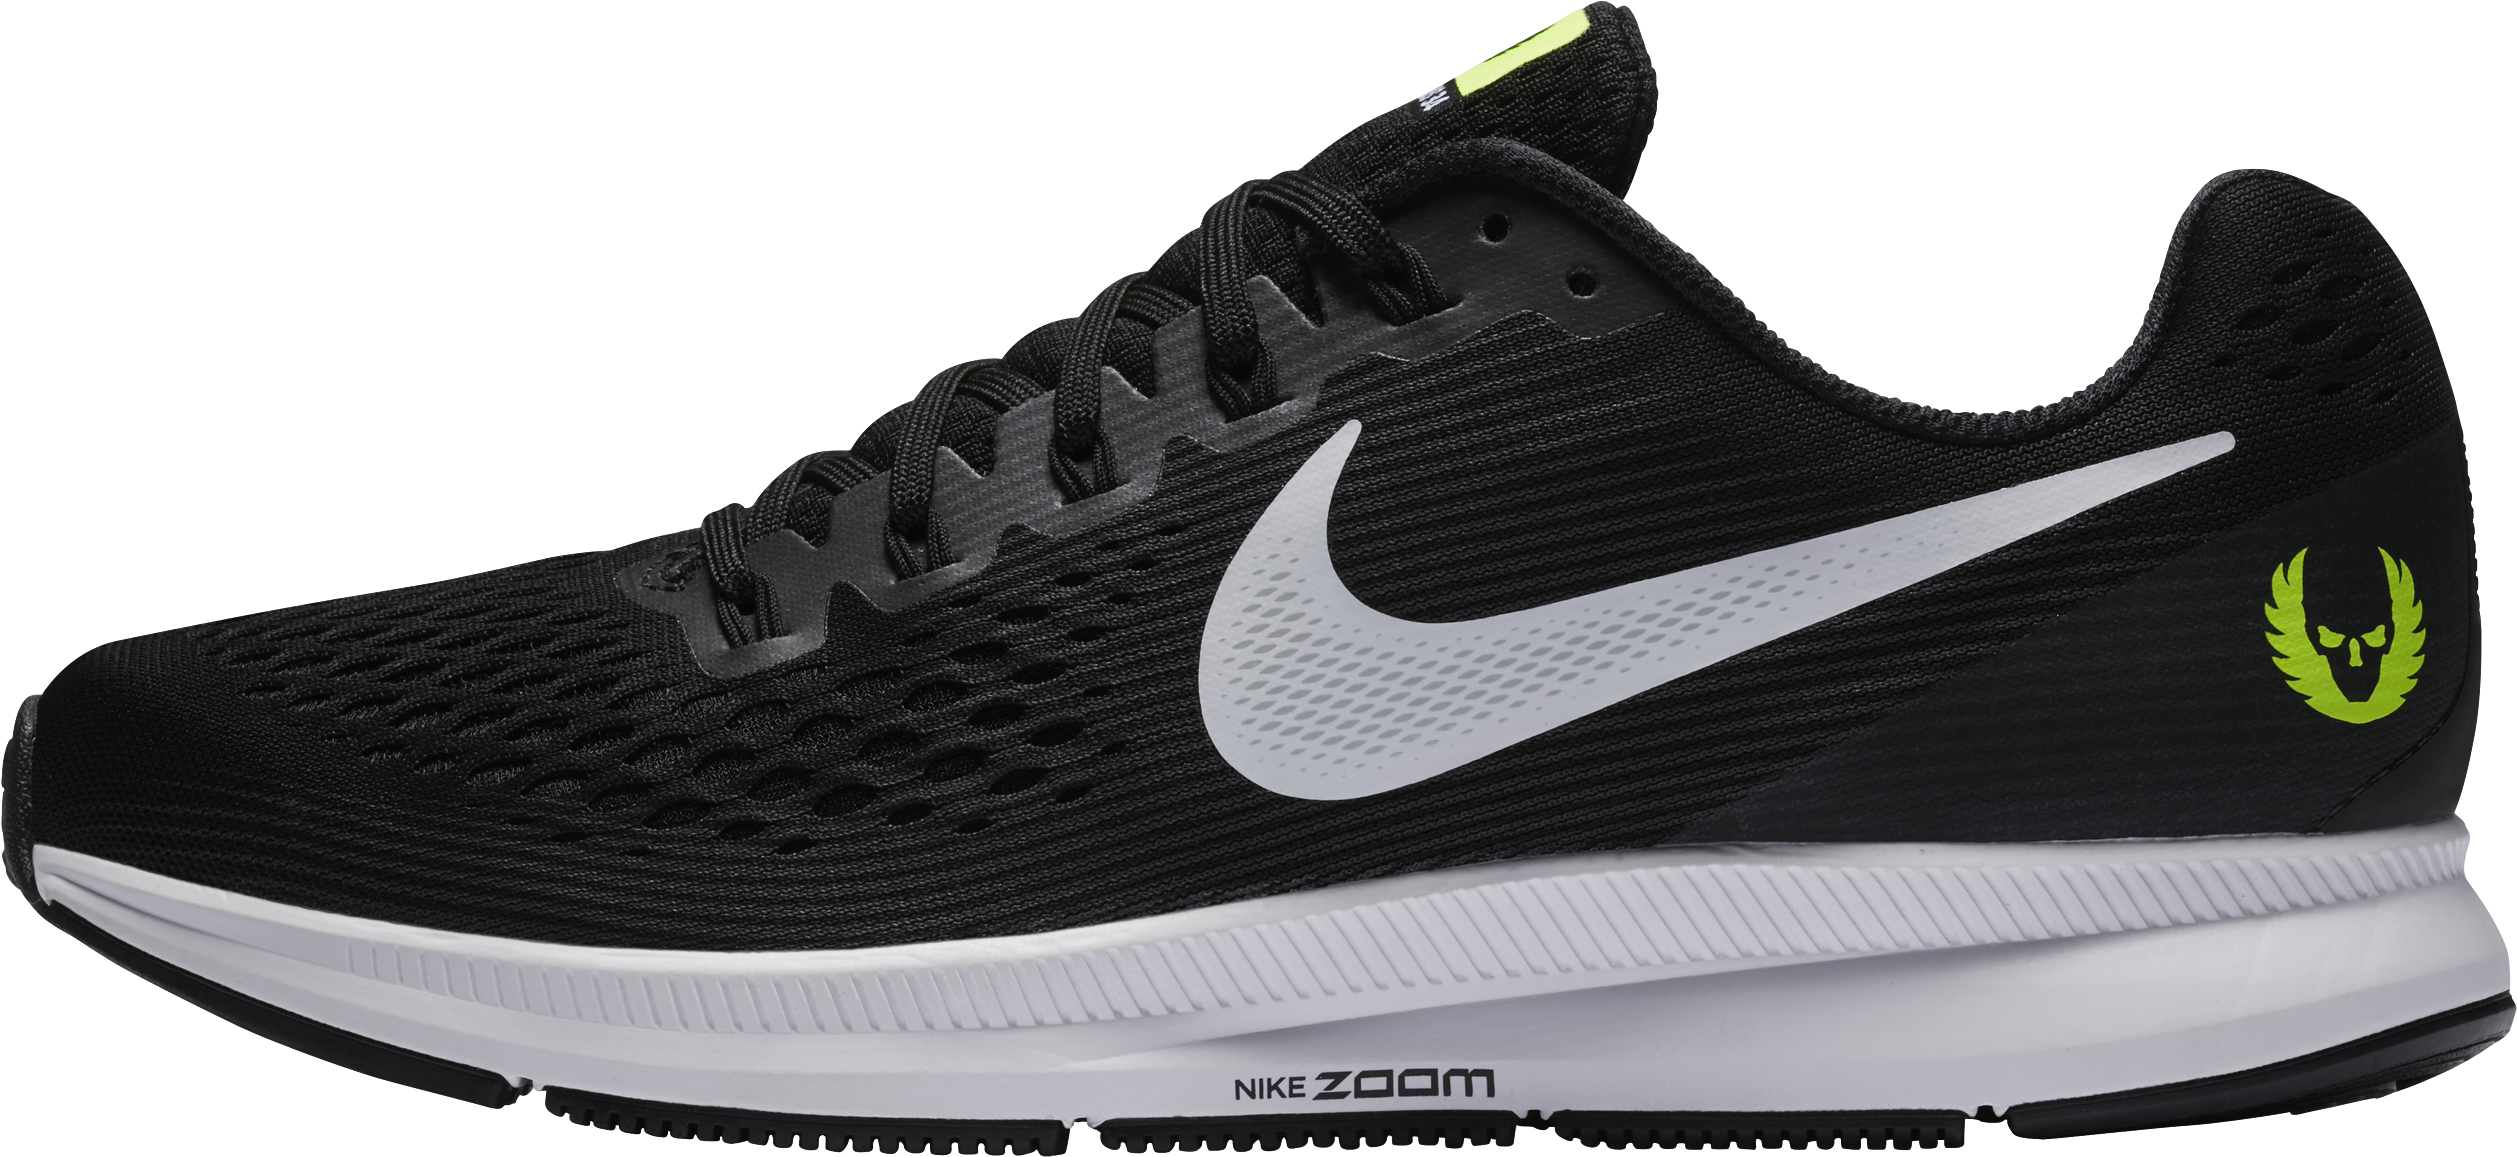 Nike Zoom Running Shoe Side View